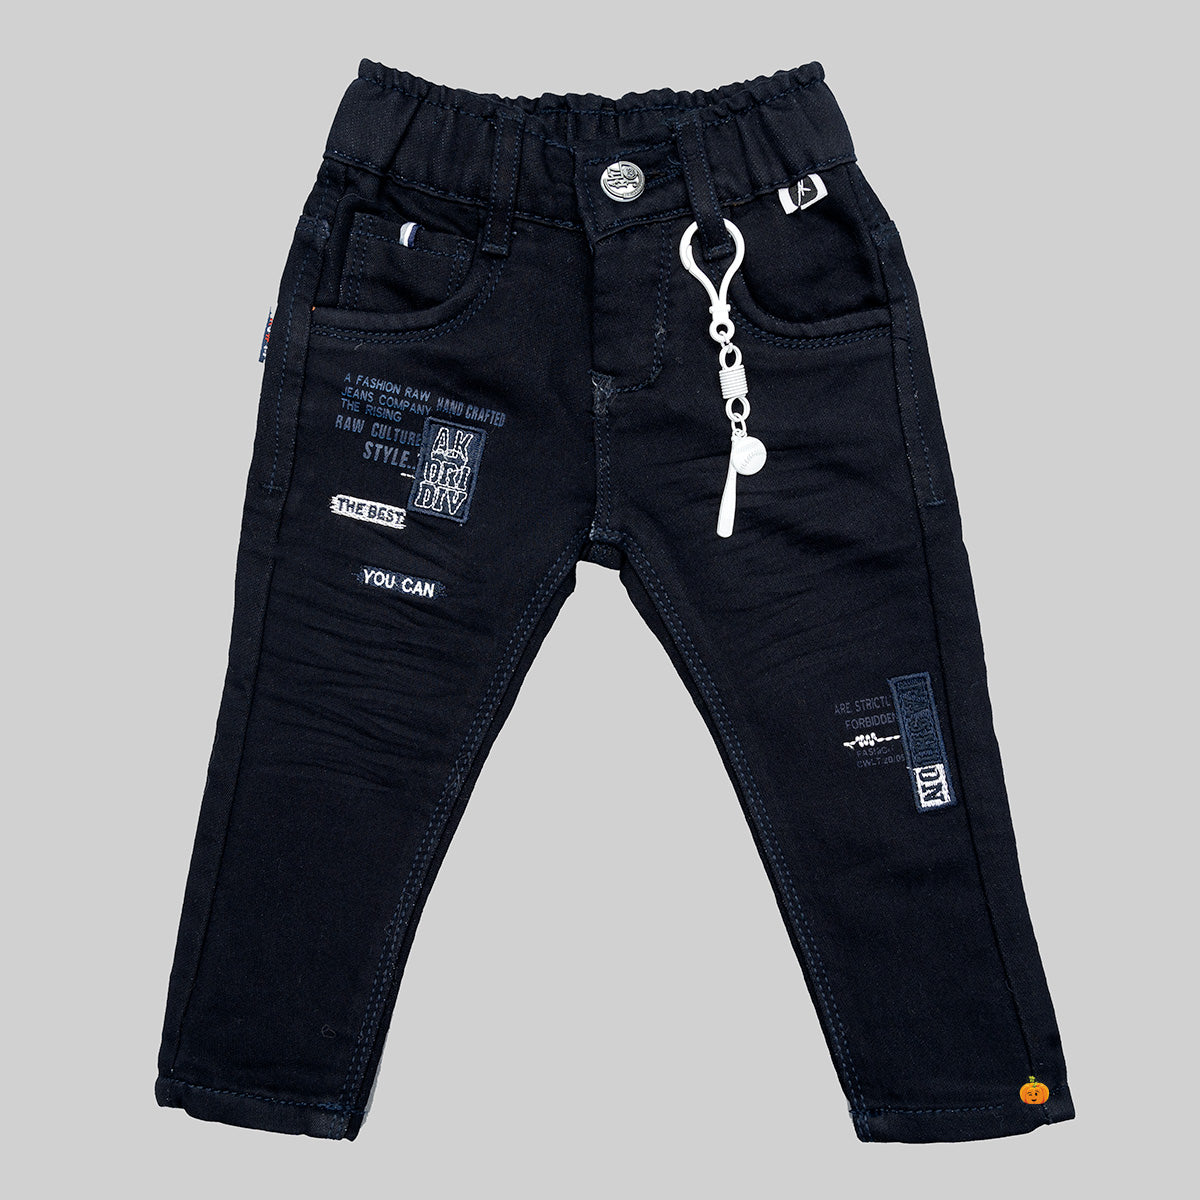 Buy Black & Navy Blue Solid Boys Jeans – Mumkins